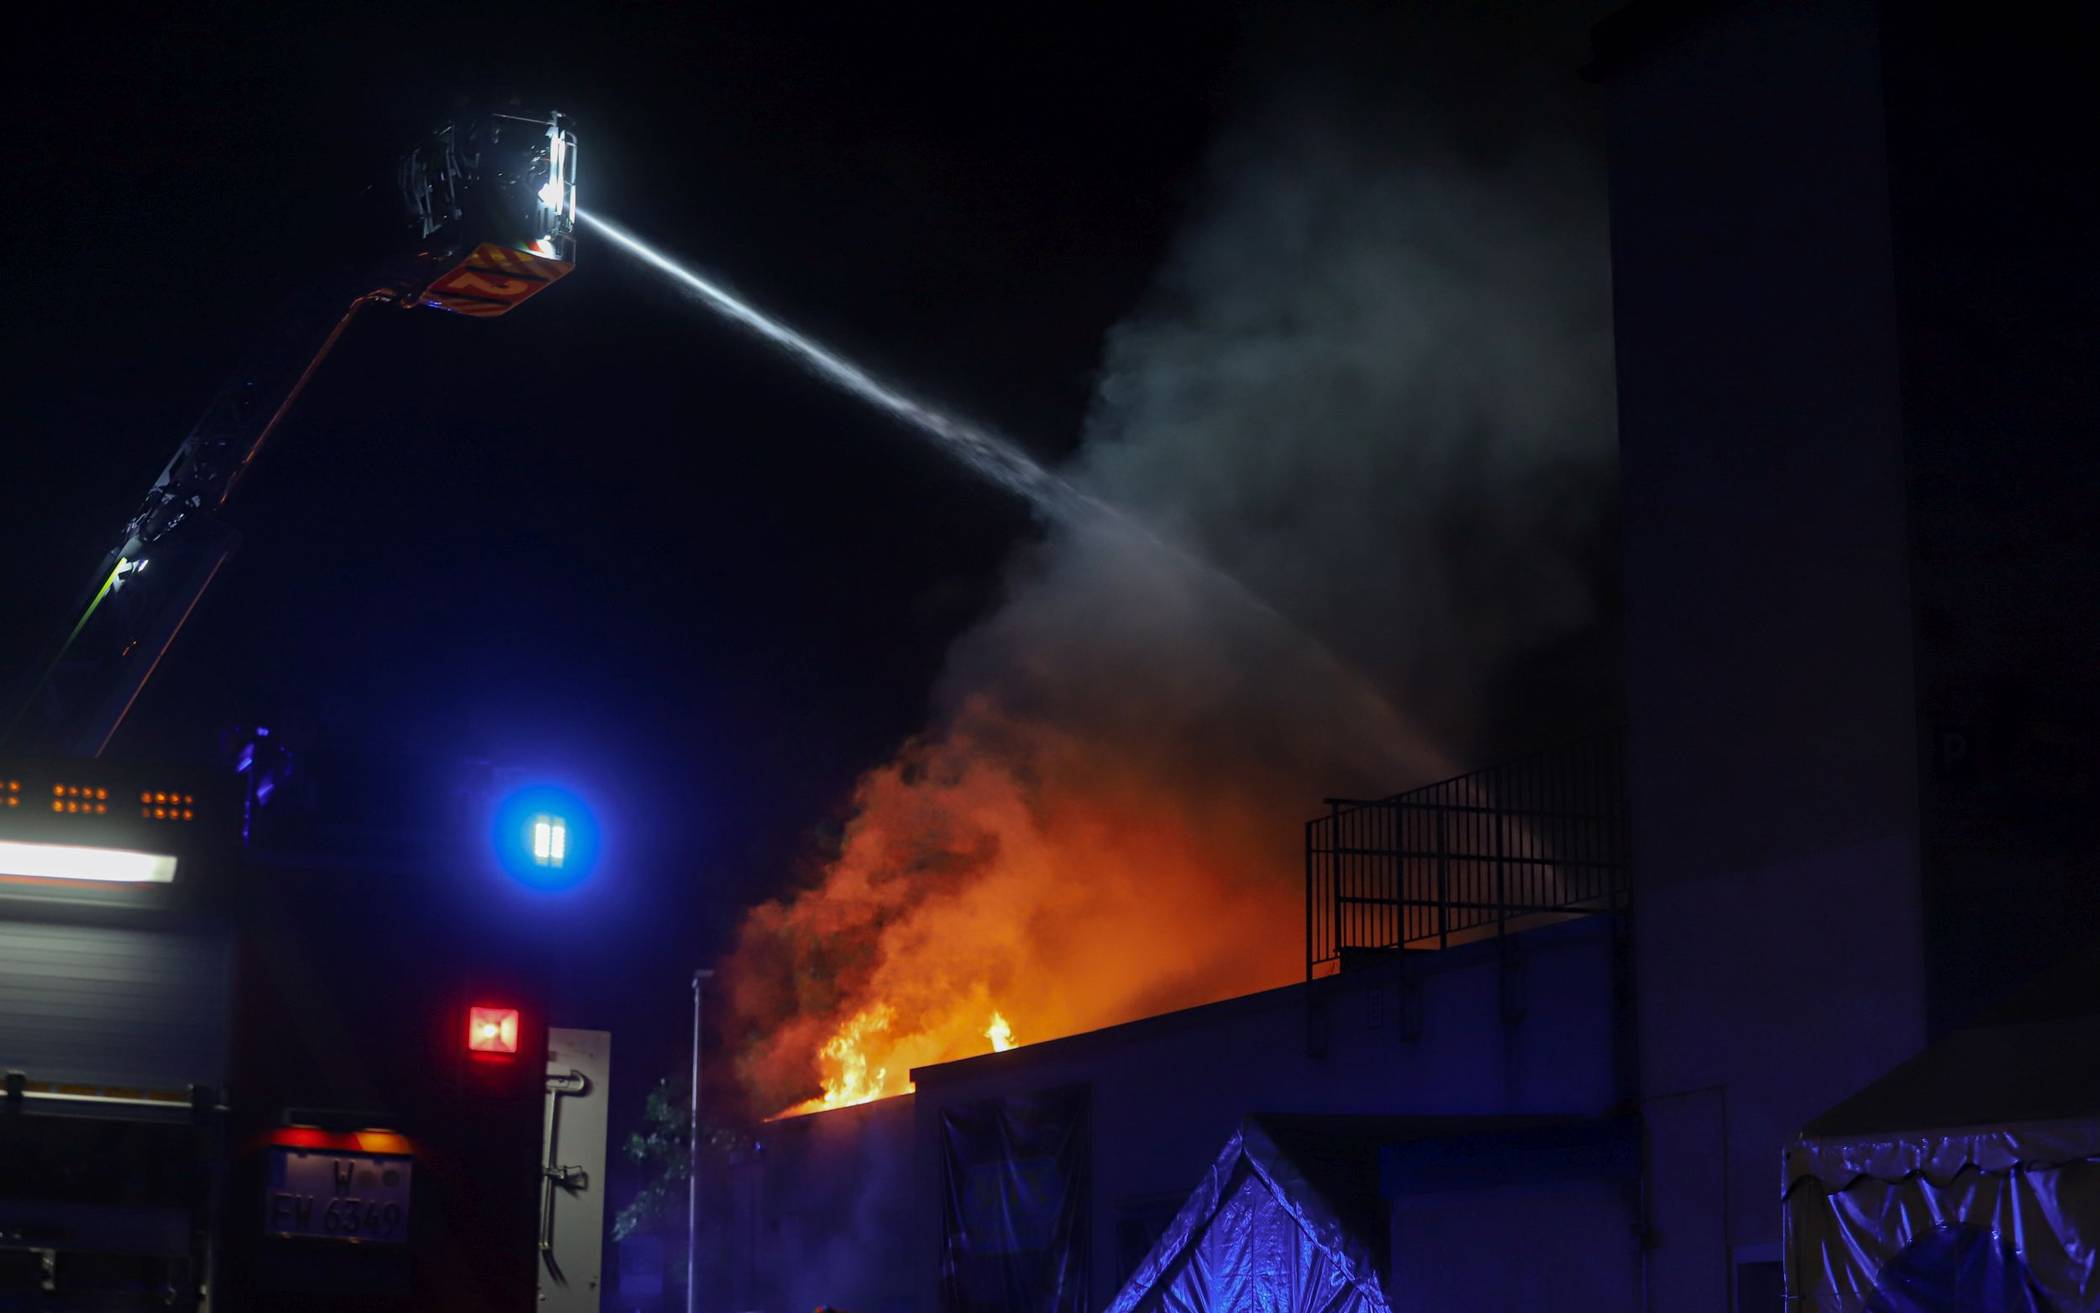 Bilder: Feuer in Lebensmittelmarkt am Wuppertaler Klingelholl